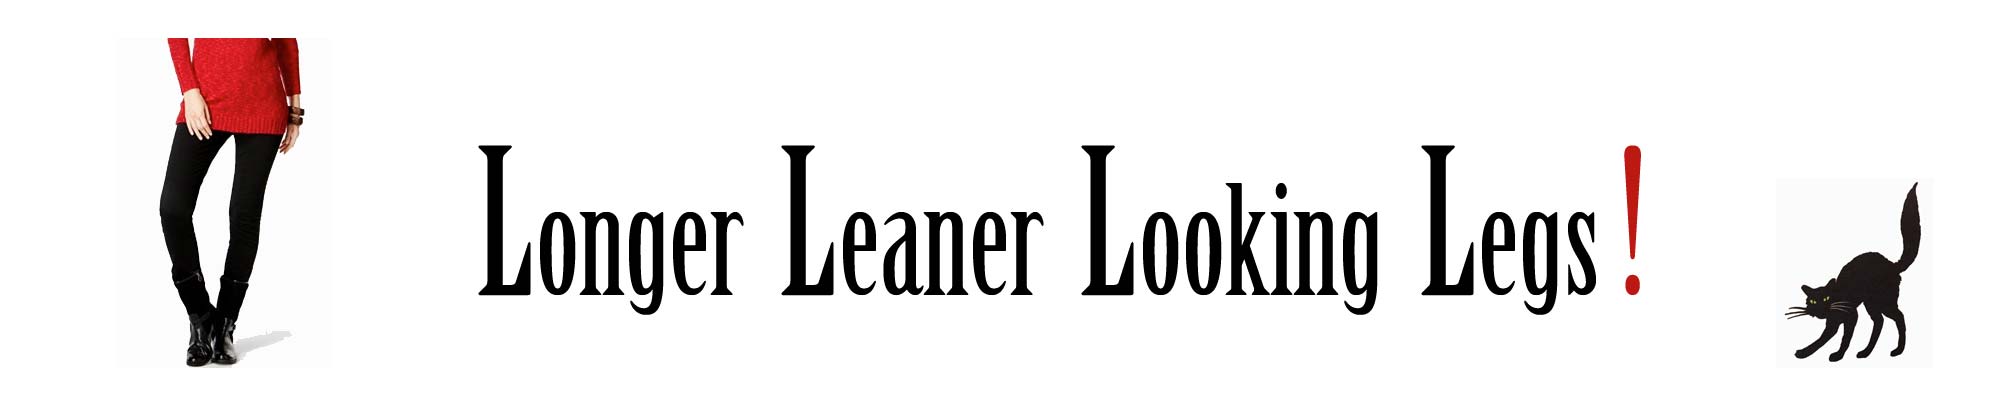 Article Title: Longer Leaner Looking Legs